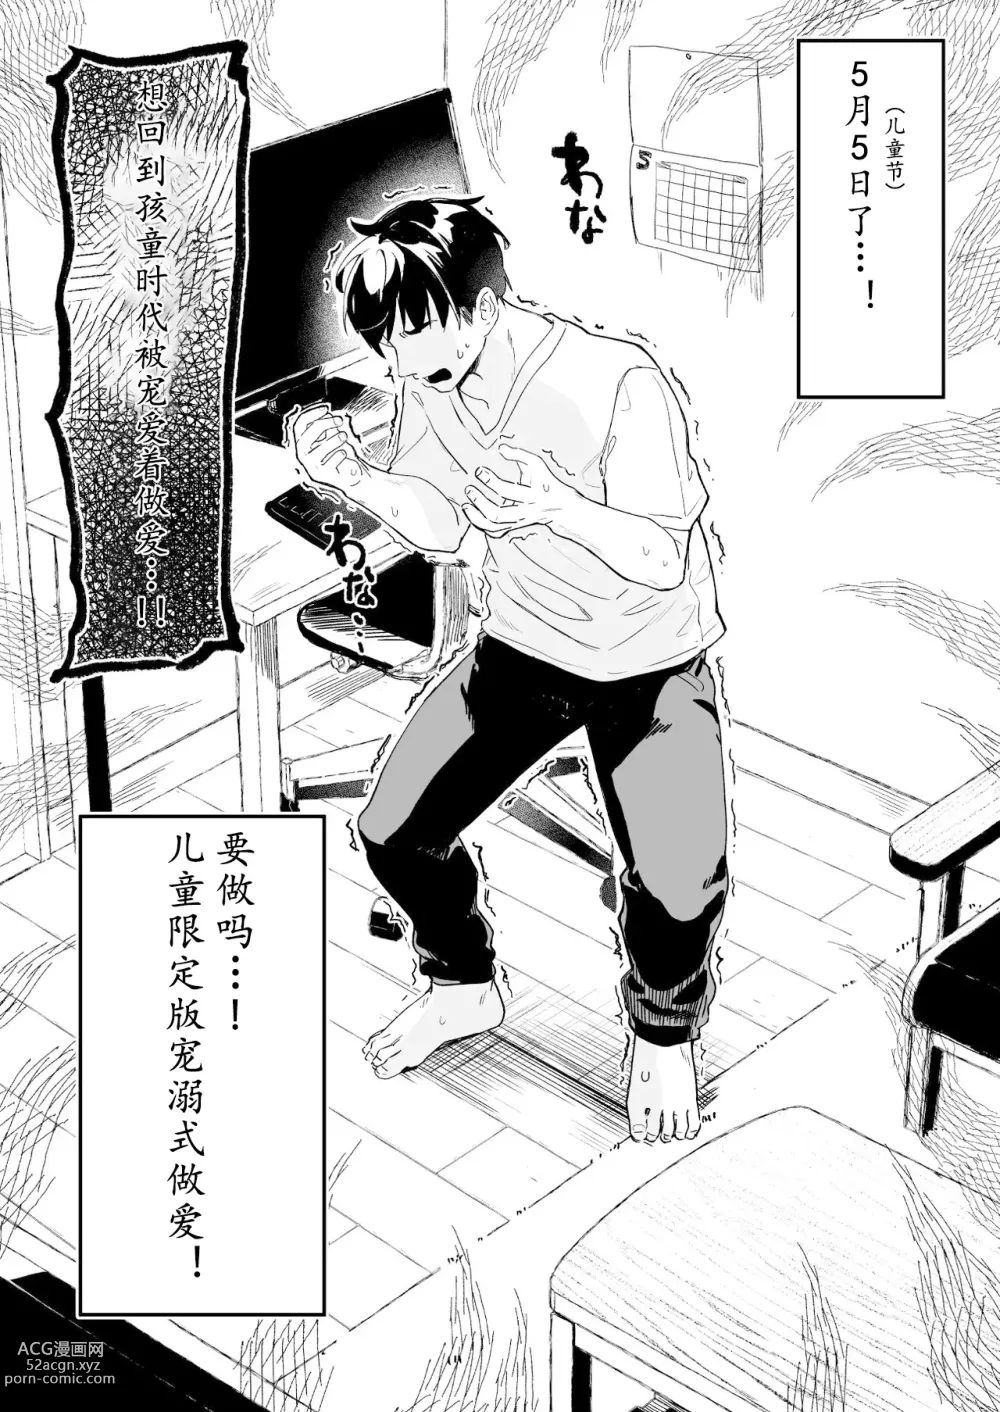 Page 3 of manga Sensei ga Erosugite Youchien Ryuunenshisou na Ken